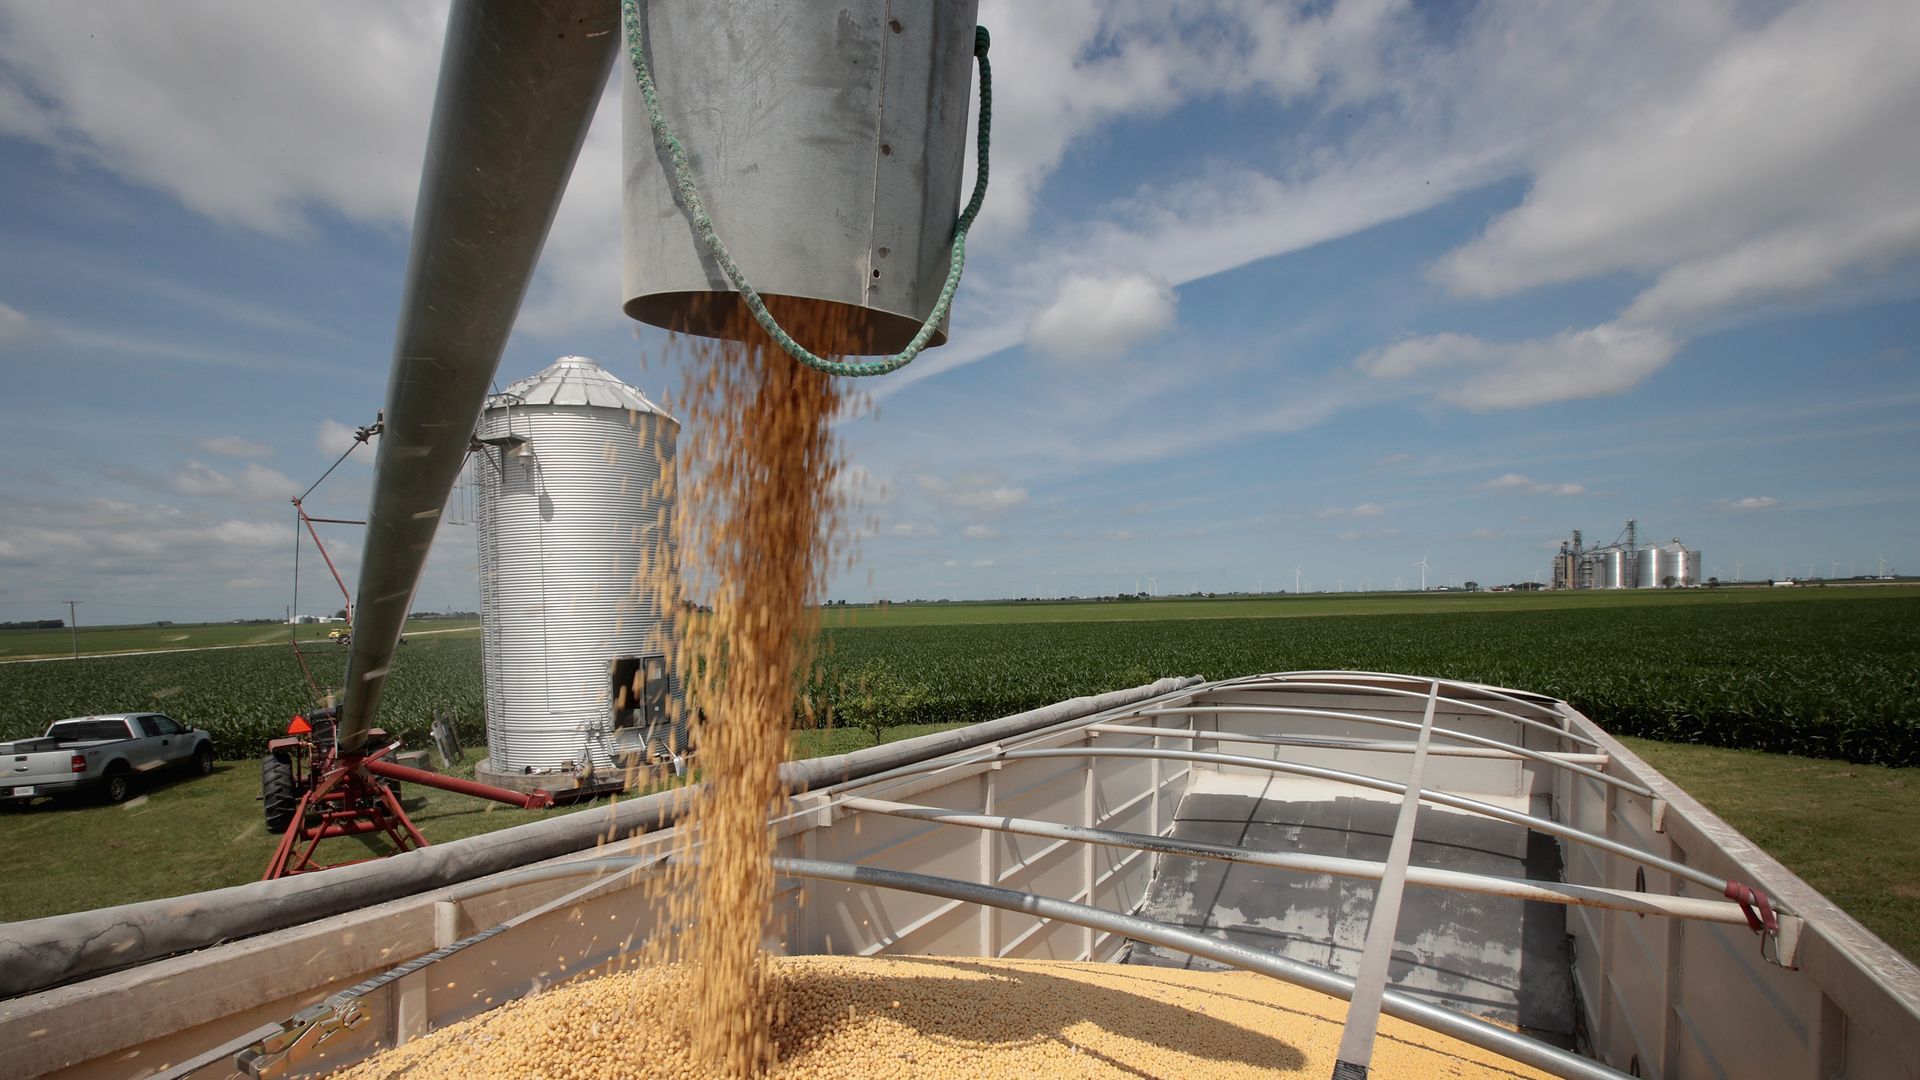 A bucket dumps soybeans into a truck